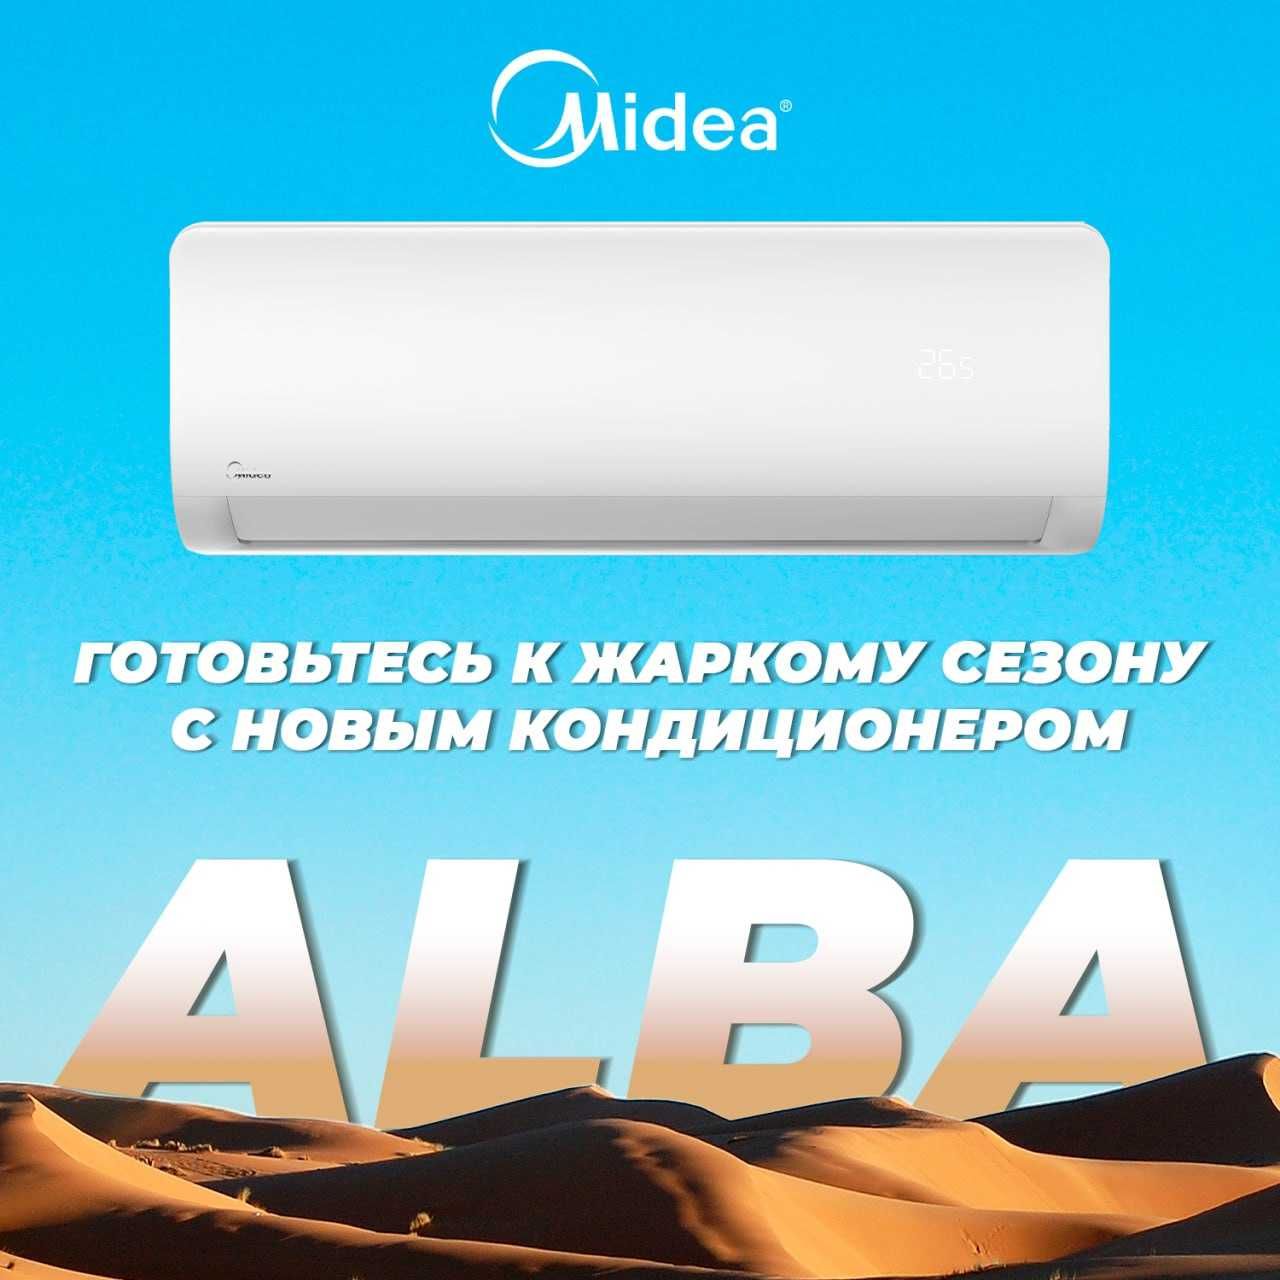 Midea ALBA - 7 inverter